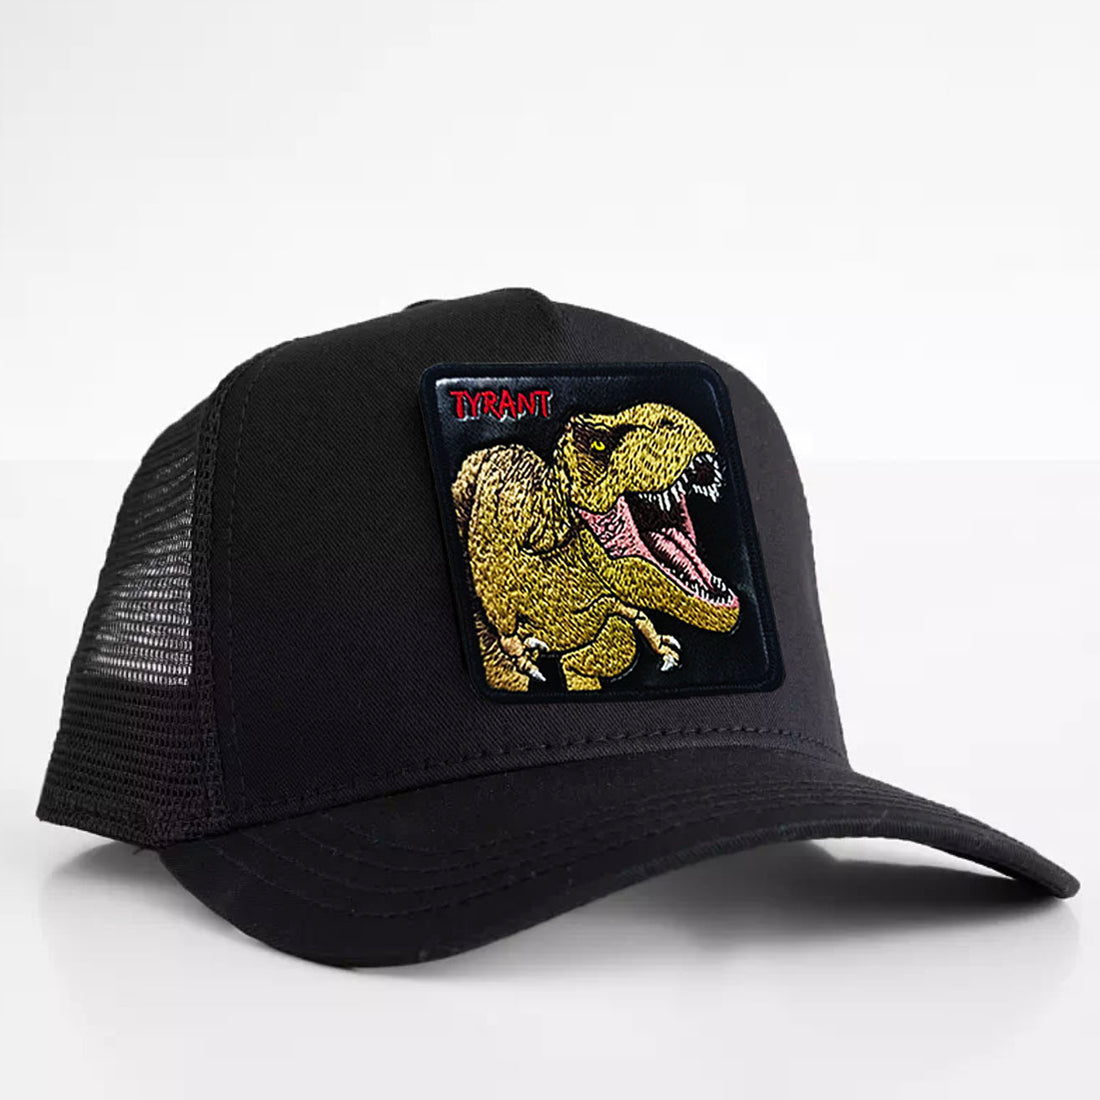 T-Rex "Tyrant" Trucker Hat